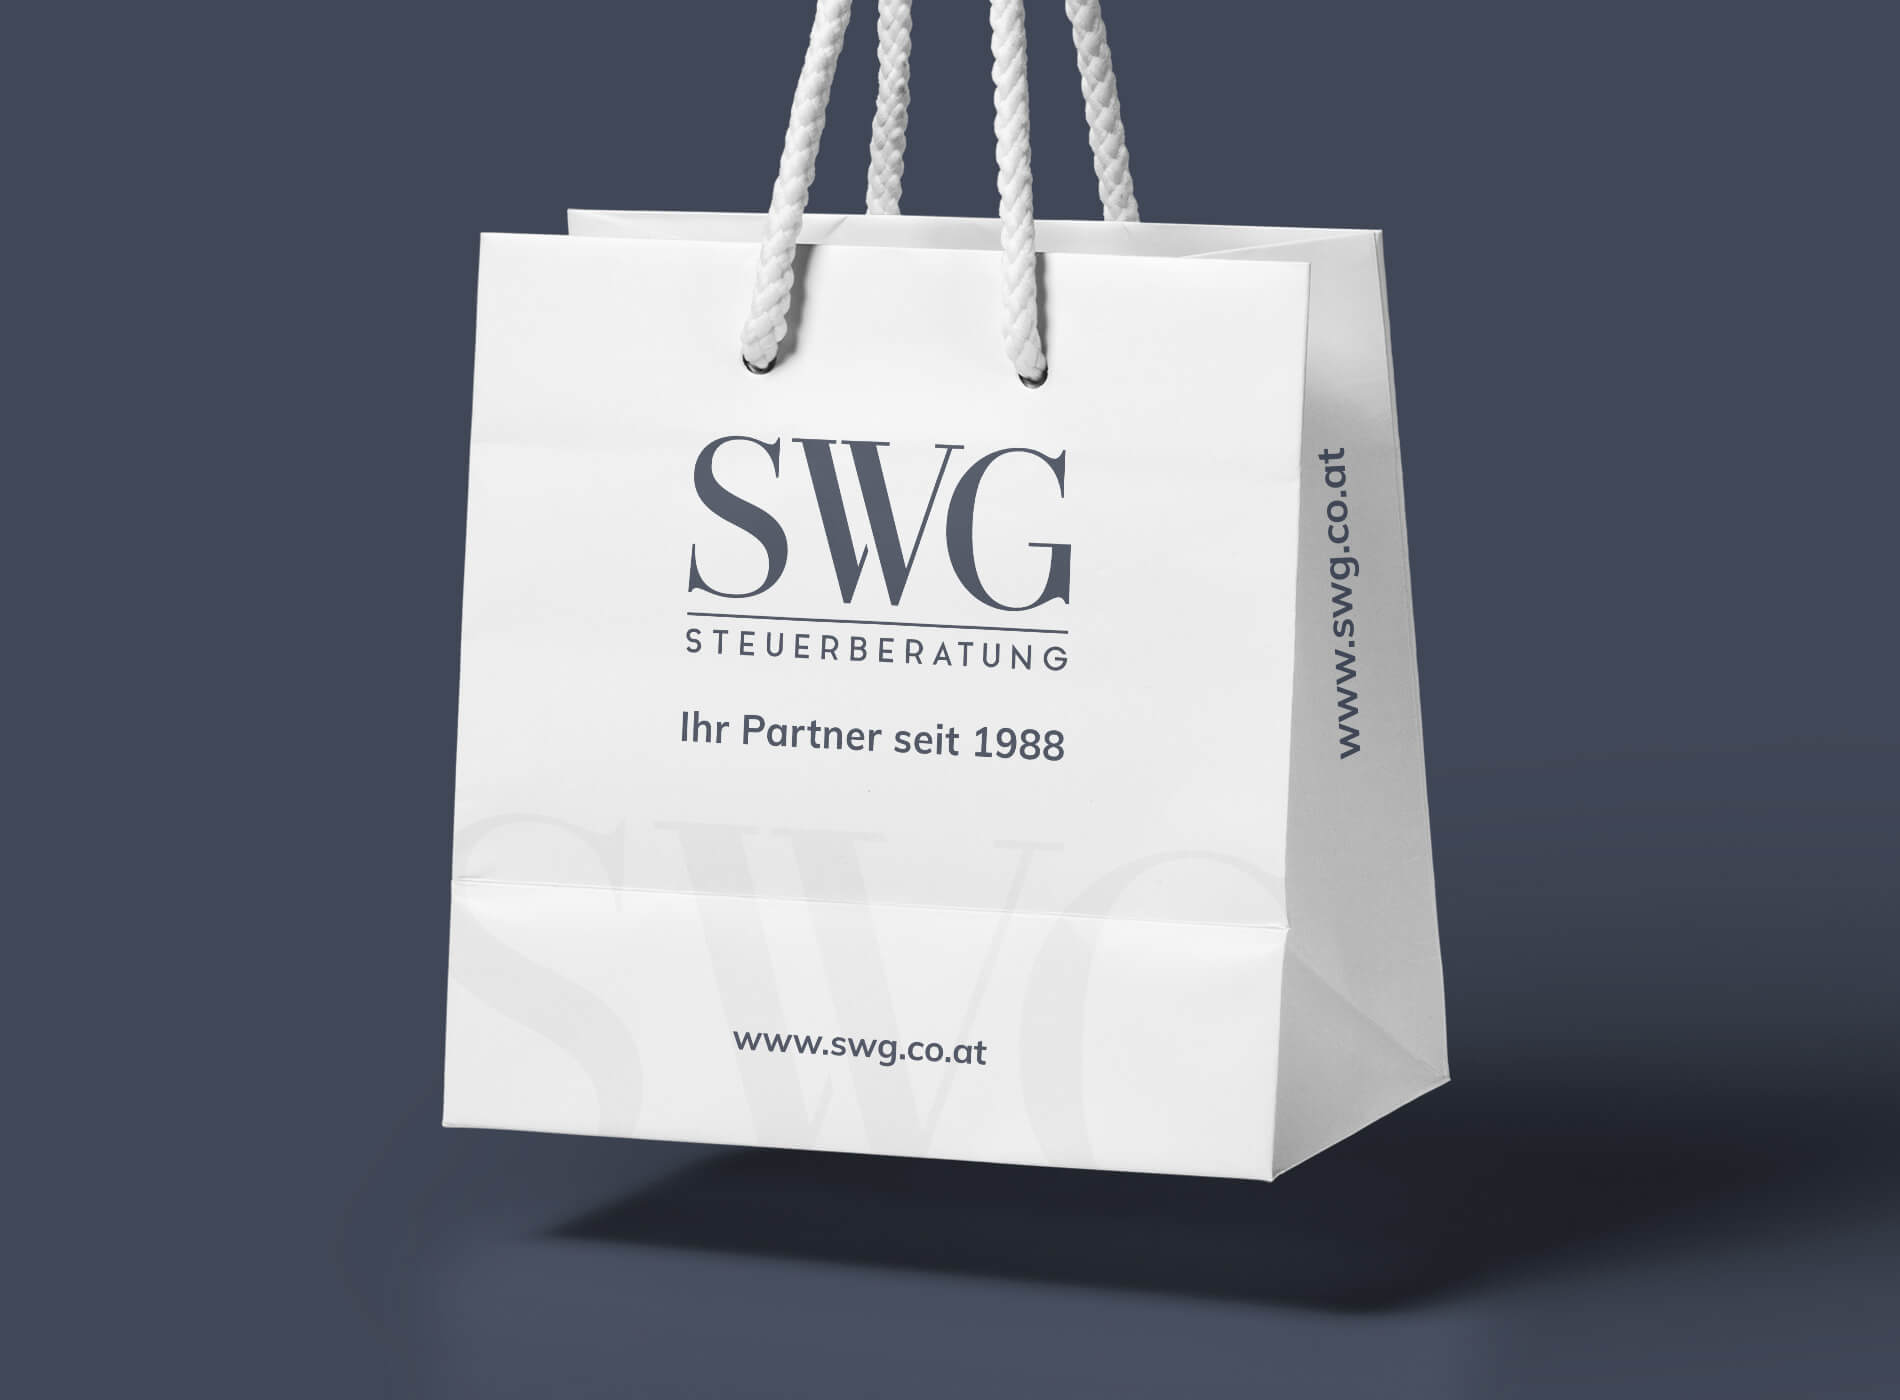 SWG Steuerberatung Papiertasche Grafikdesign